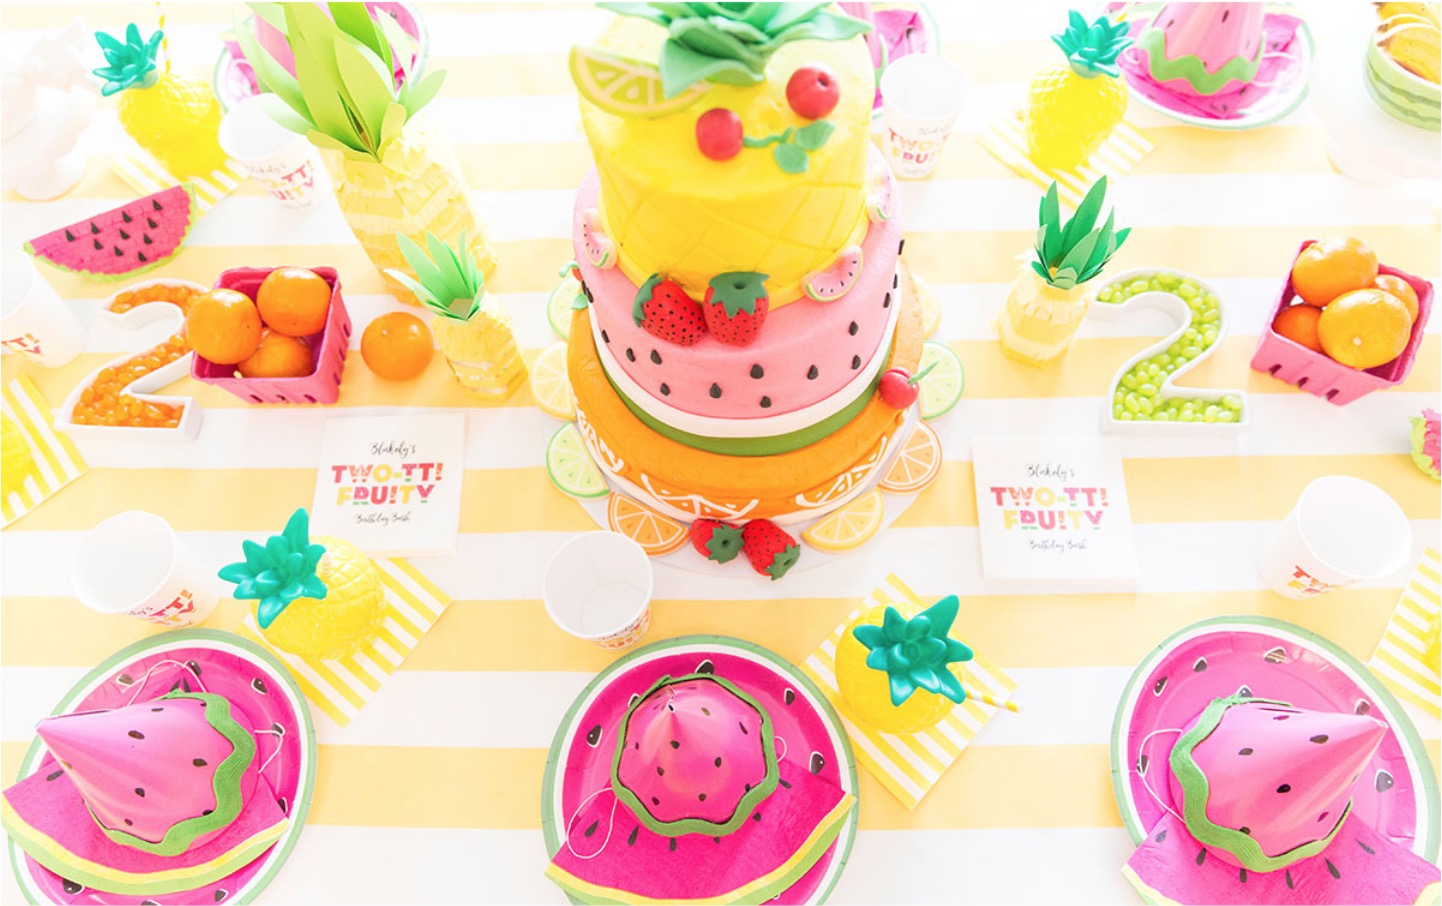 Two-tti Fruity Birthday Party Theme